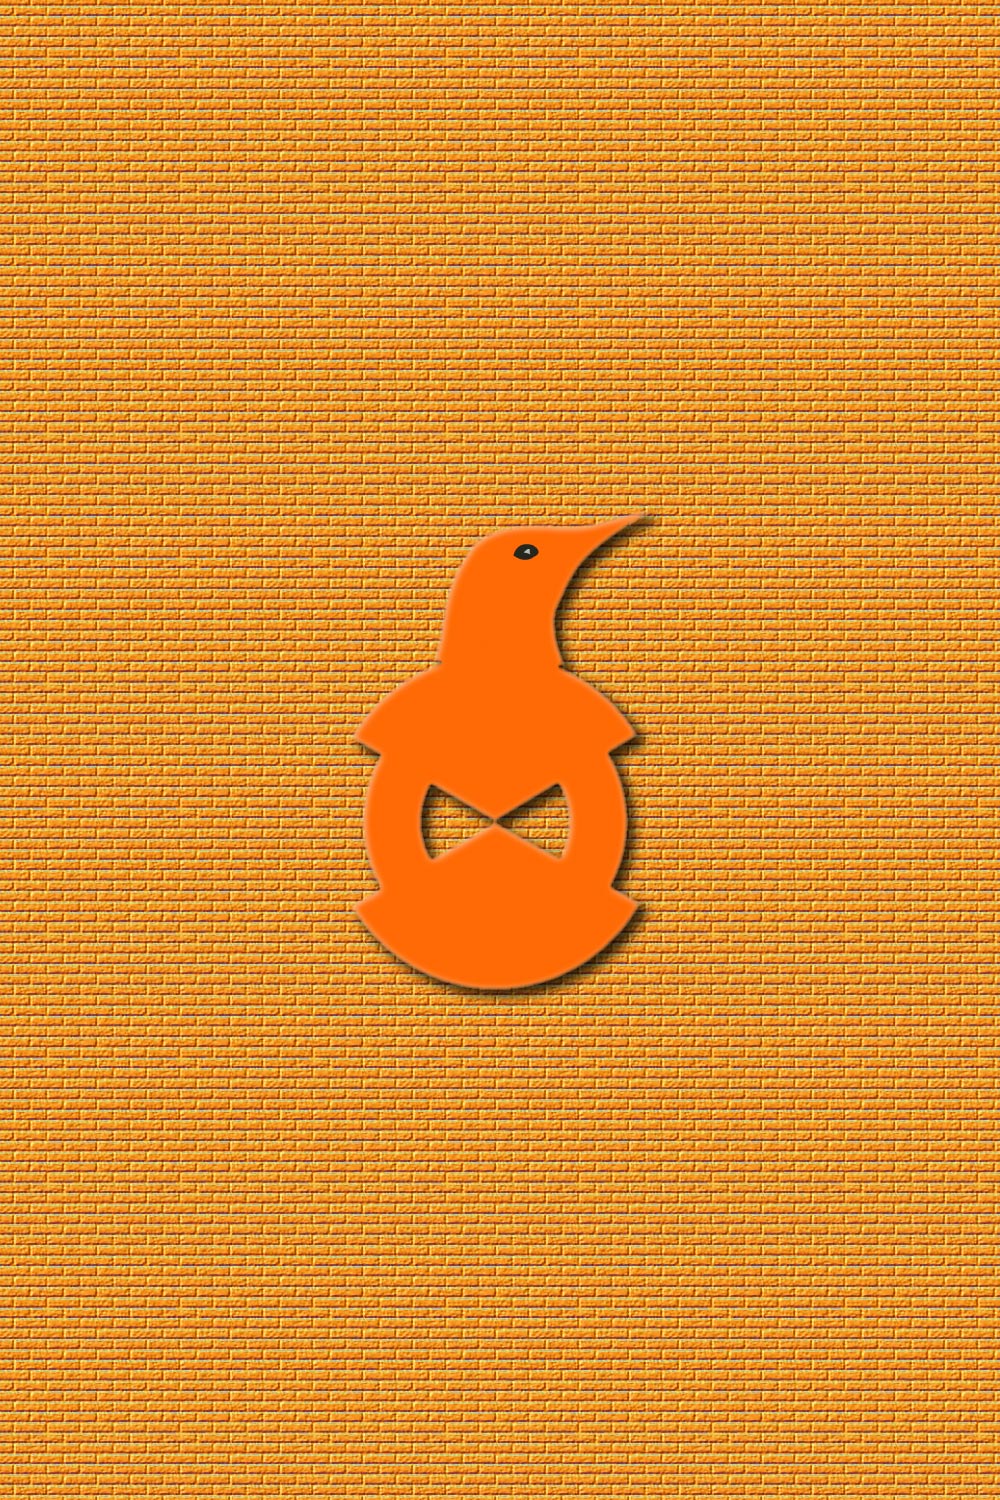 Penguin logo design template vector illustration, Bird logo design pinterest preview image.